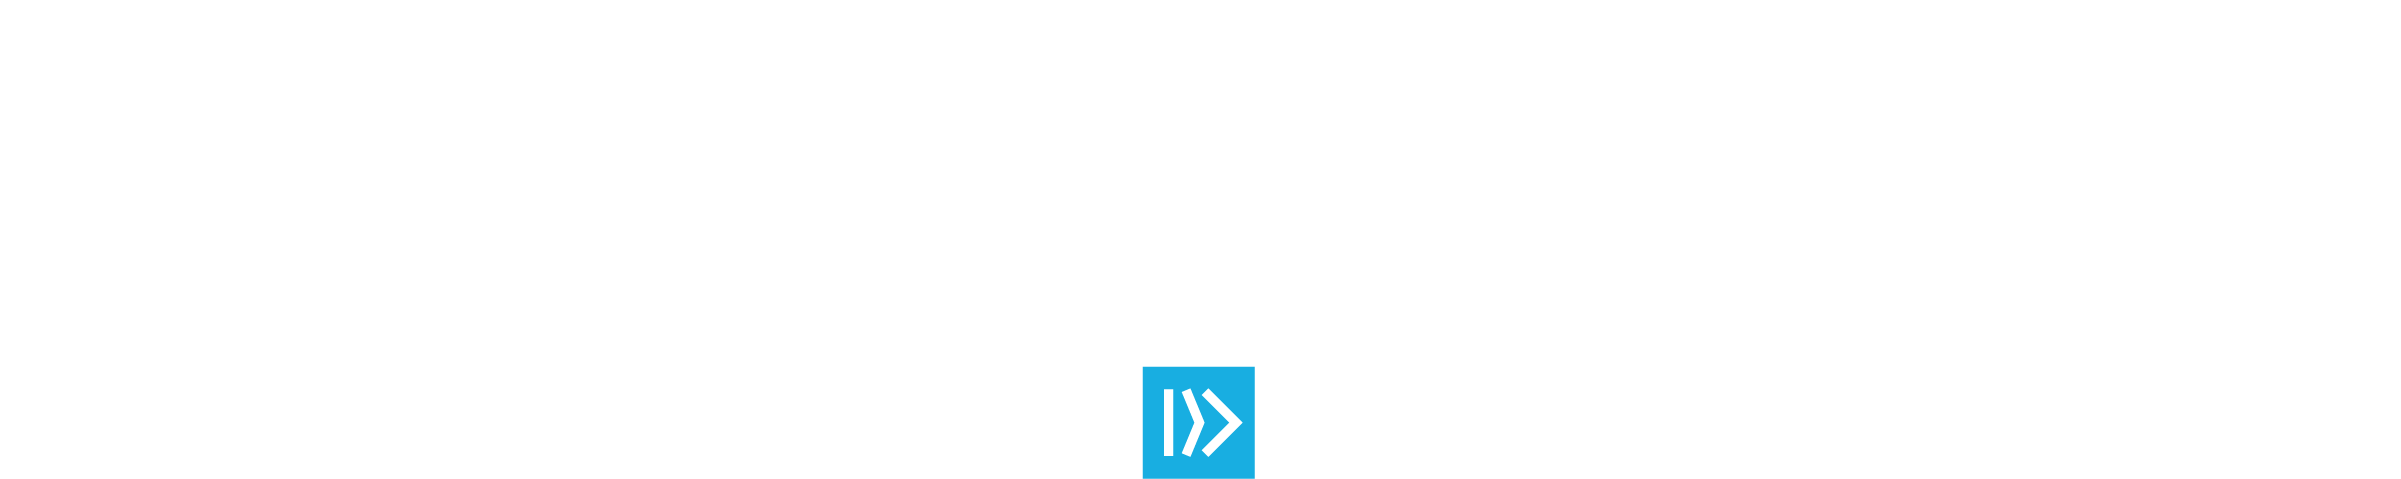 SN_Church Planter Global Vision Trips Logo_Brandmark Solid_WhiteBlue_RGB